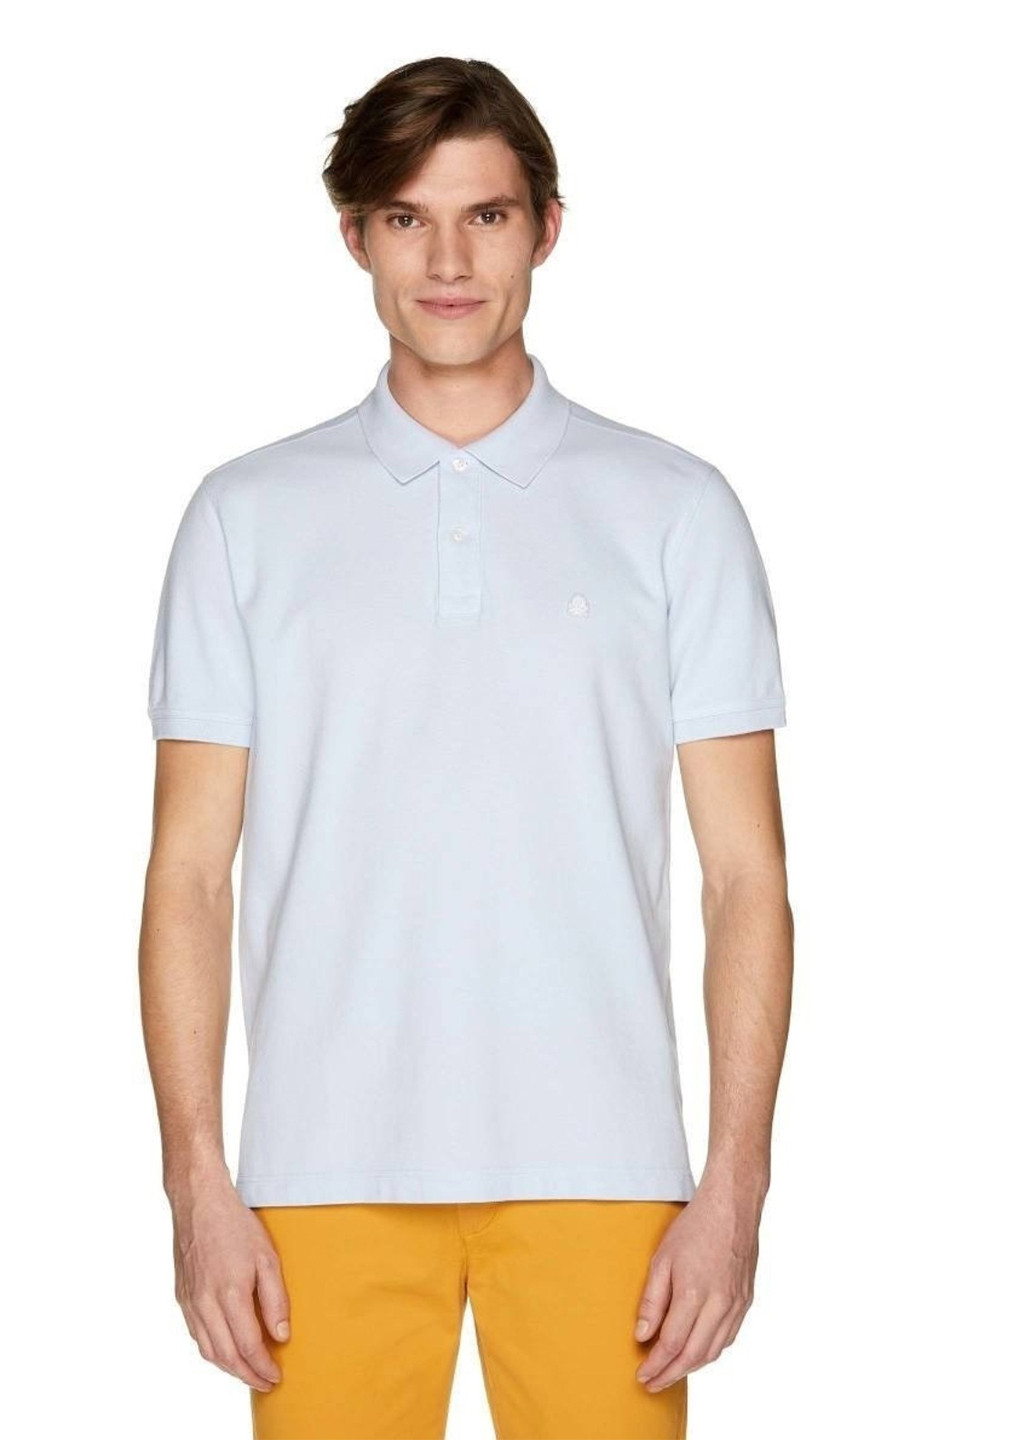 Белая футболка-поло для мужчин United Colors of Benetton однотонная